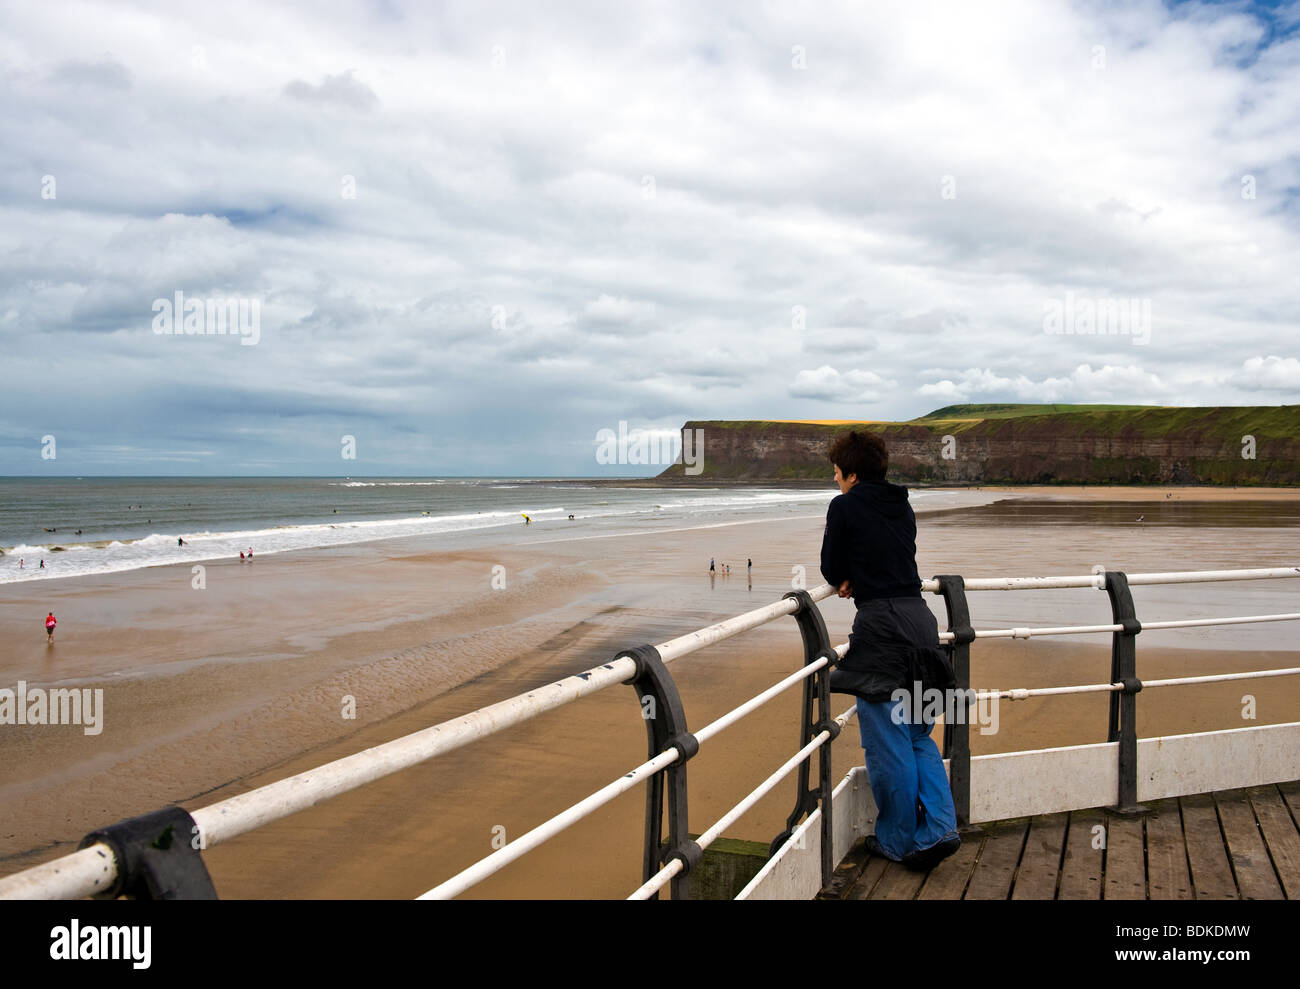 Woman Stood On Pier Watching Surfers Stock Photo